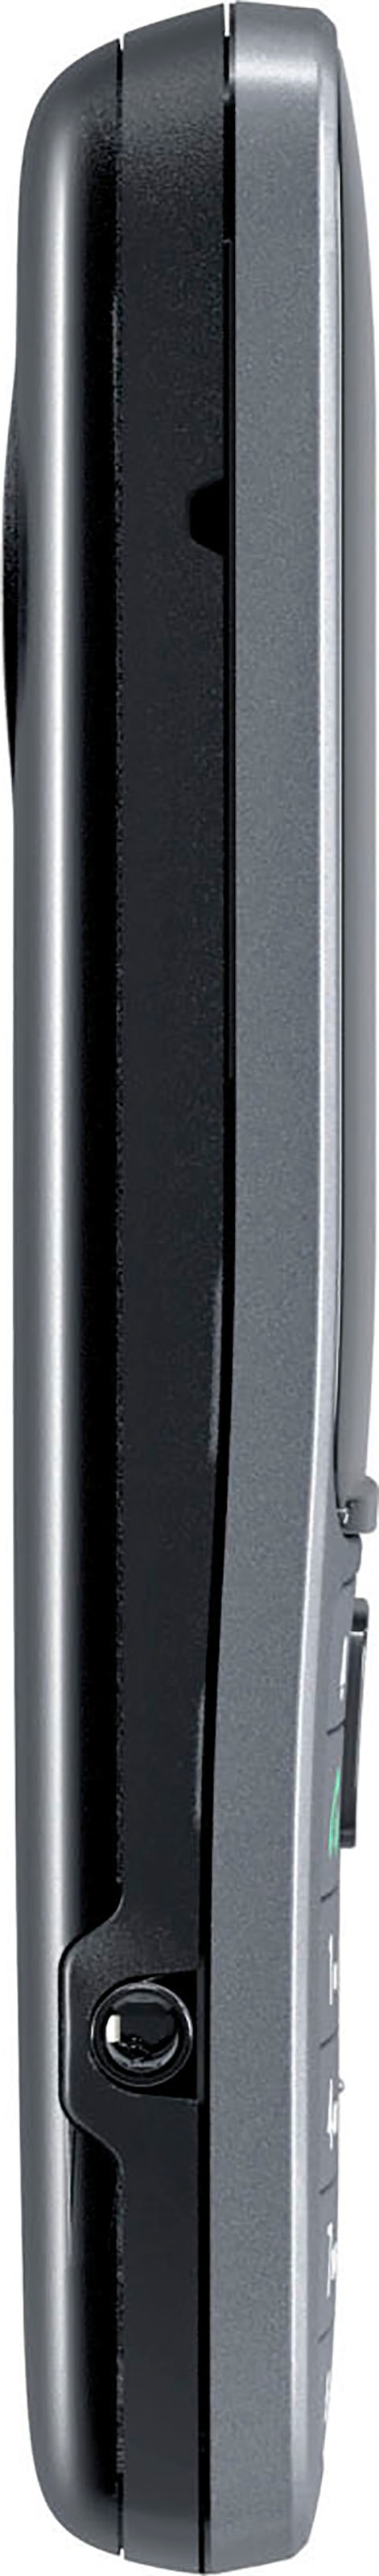 Telekom Festnetztelefon »DECT Handset elmeg D142«, (Bluetooth) | BAUR | Telefone